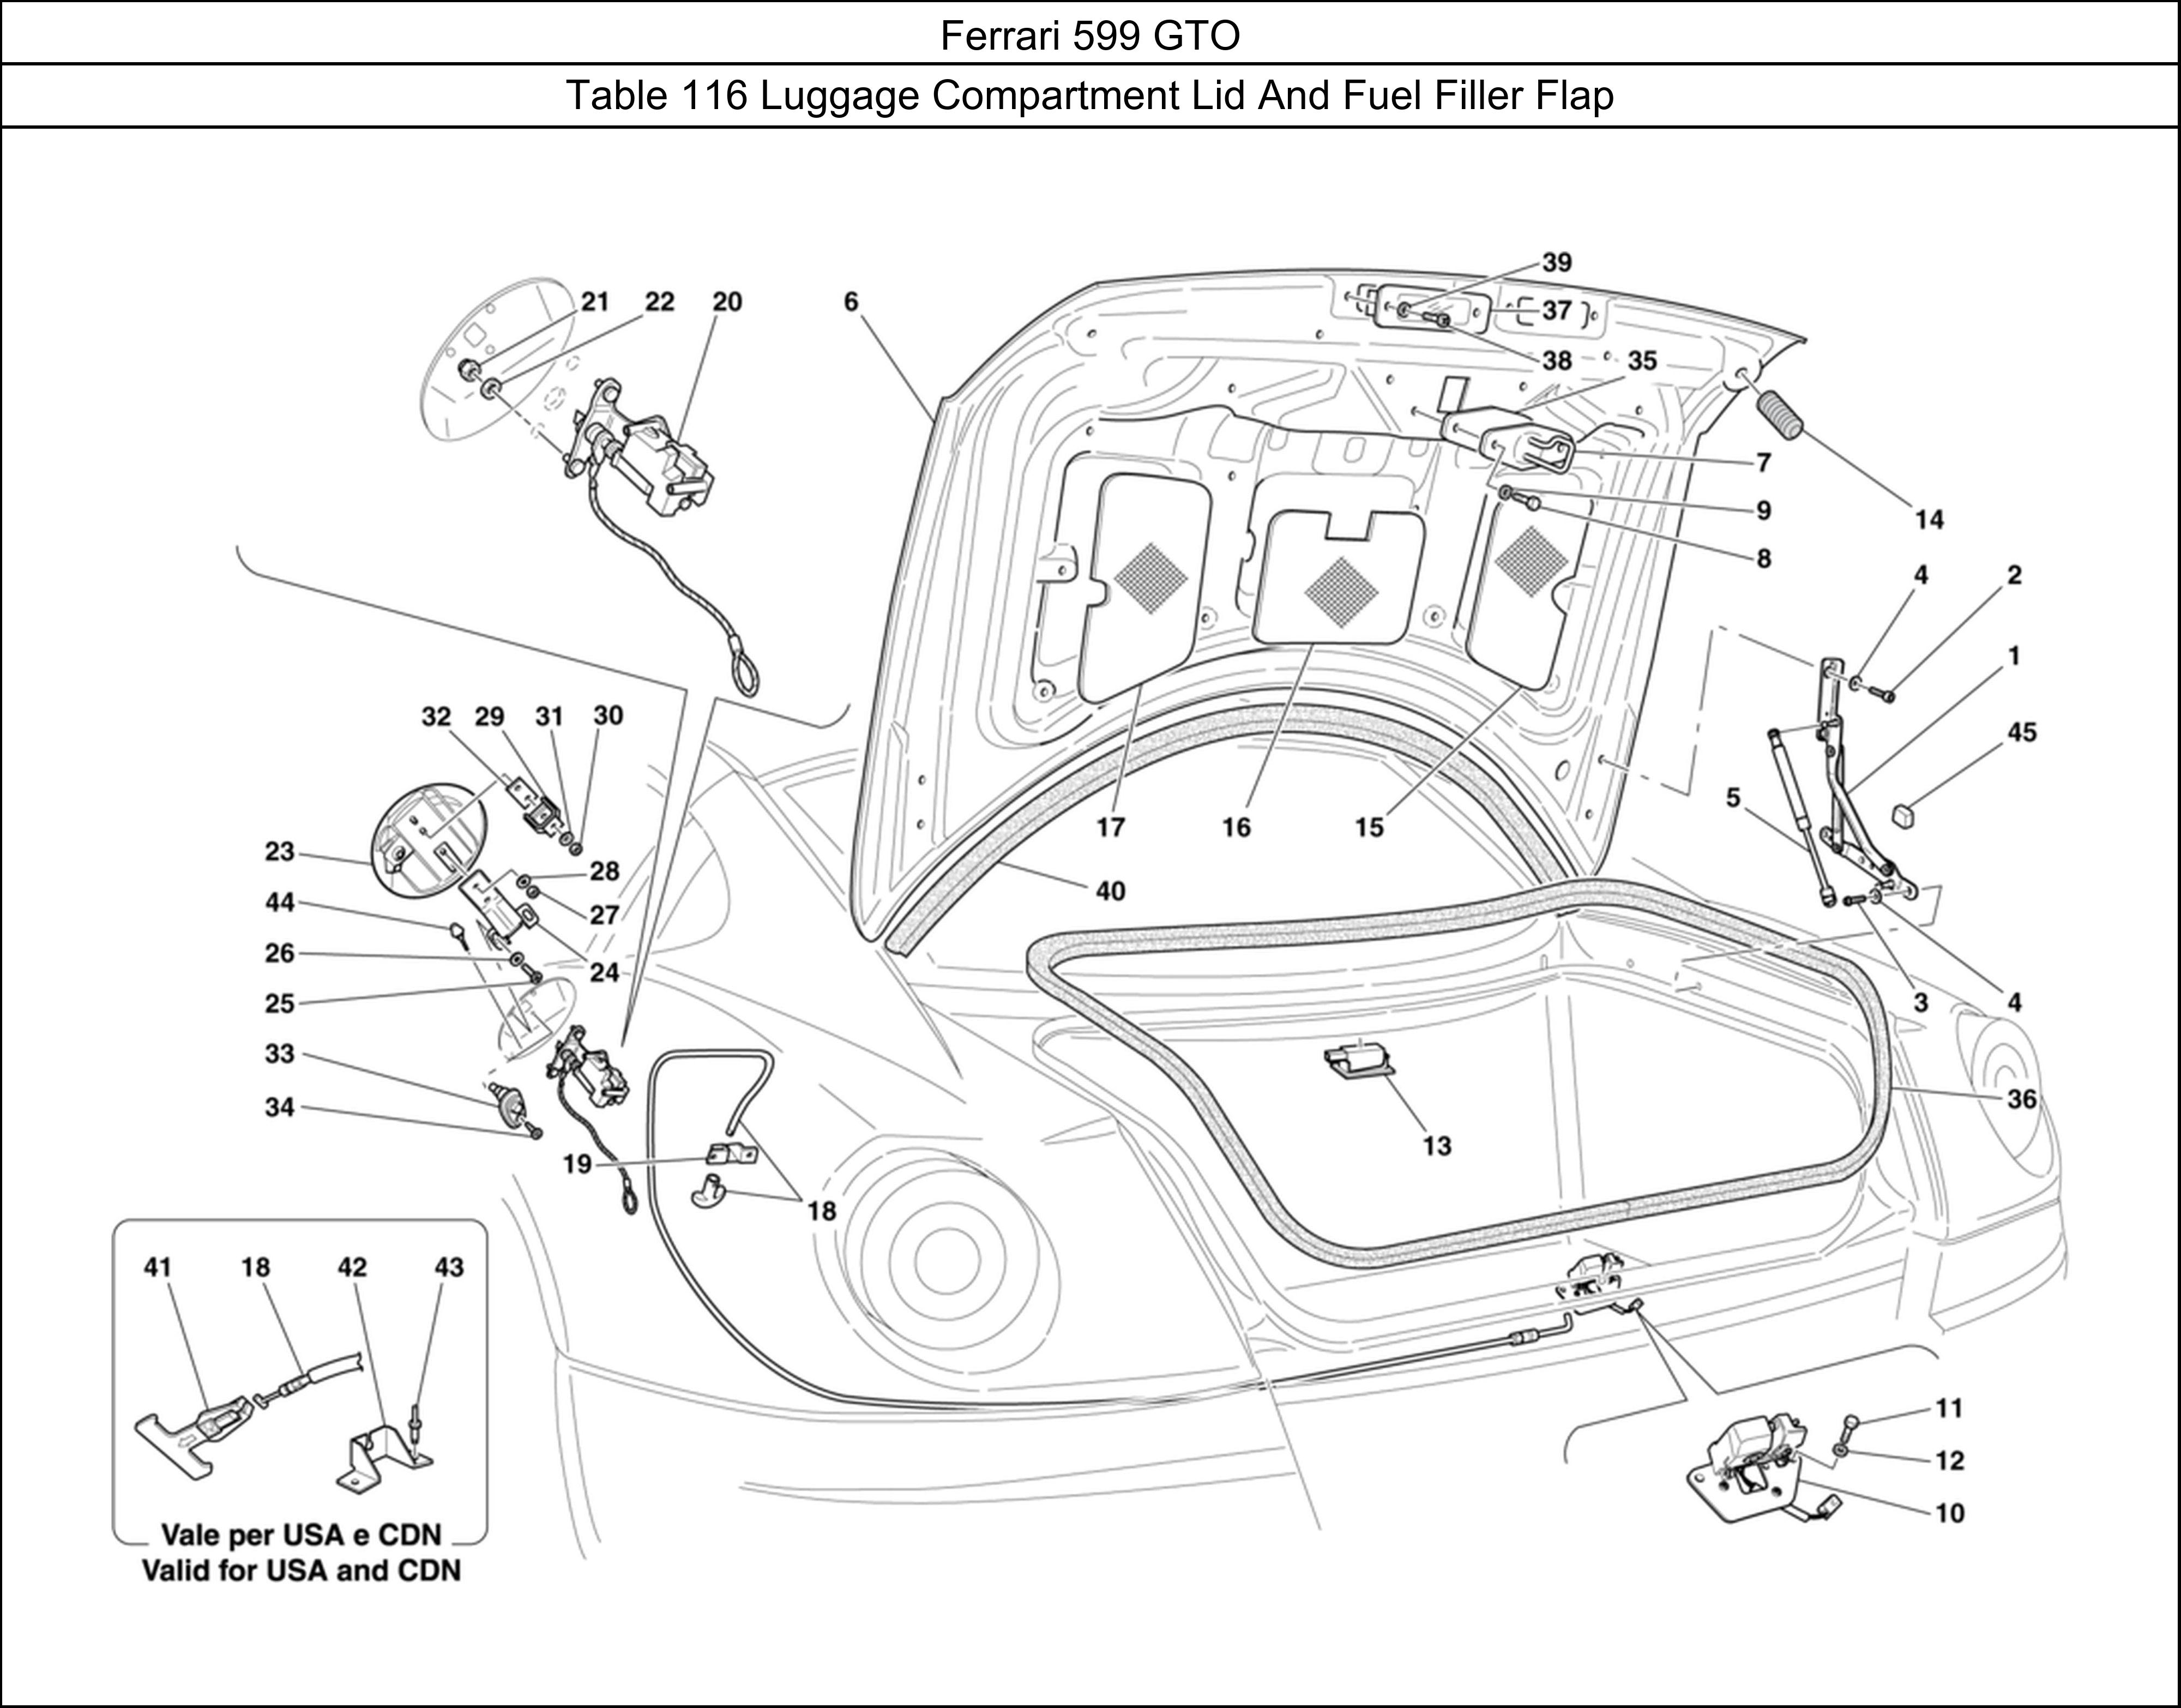 Ferrari Parts Ferrari 599 GTO Table 116 Luggage Compartment Lid And Fuel Filler Flap